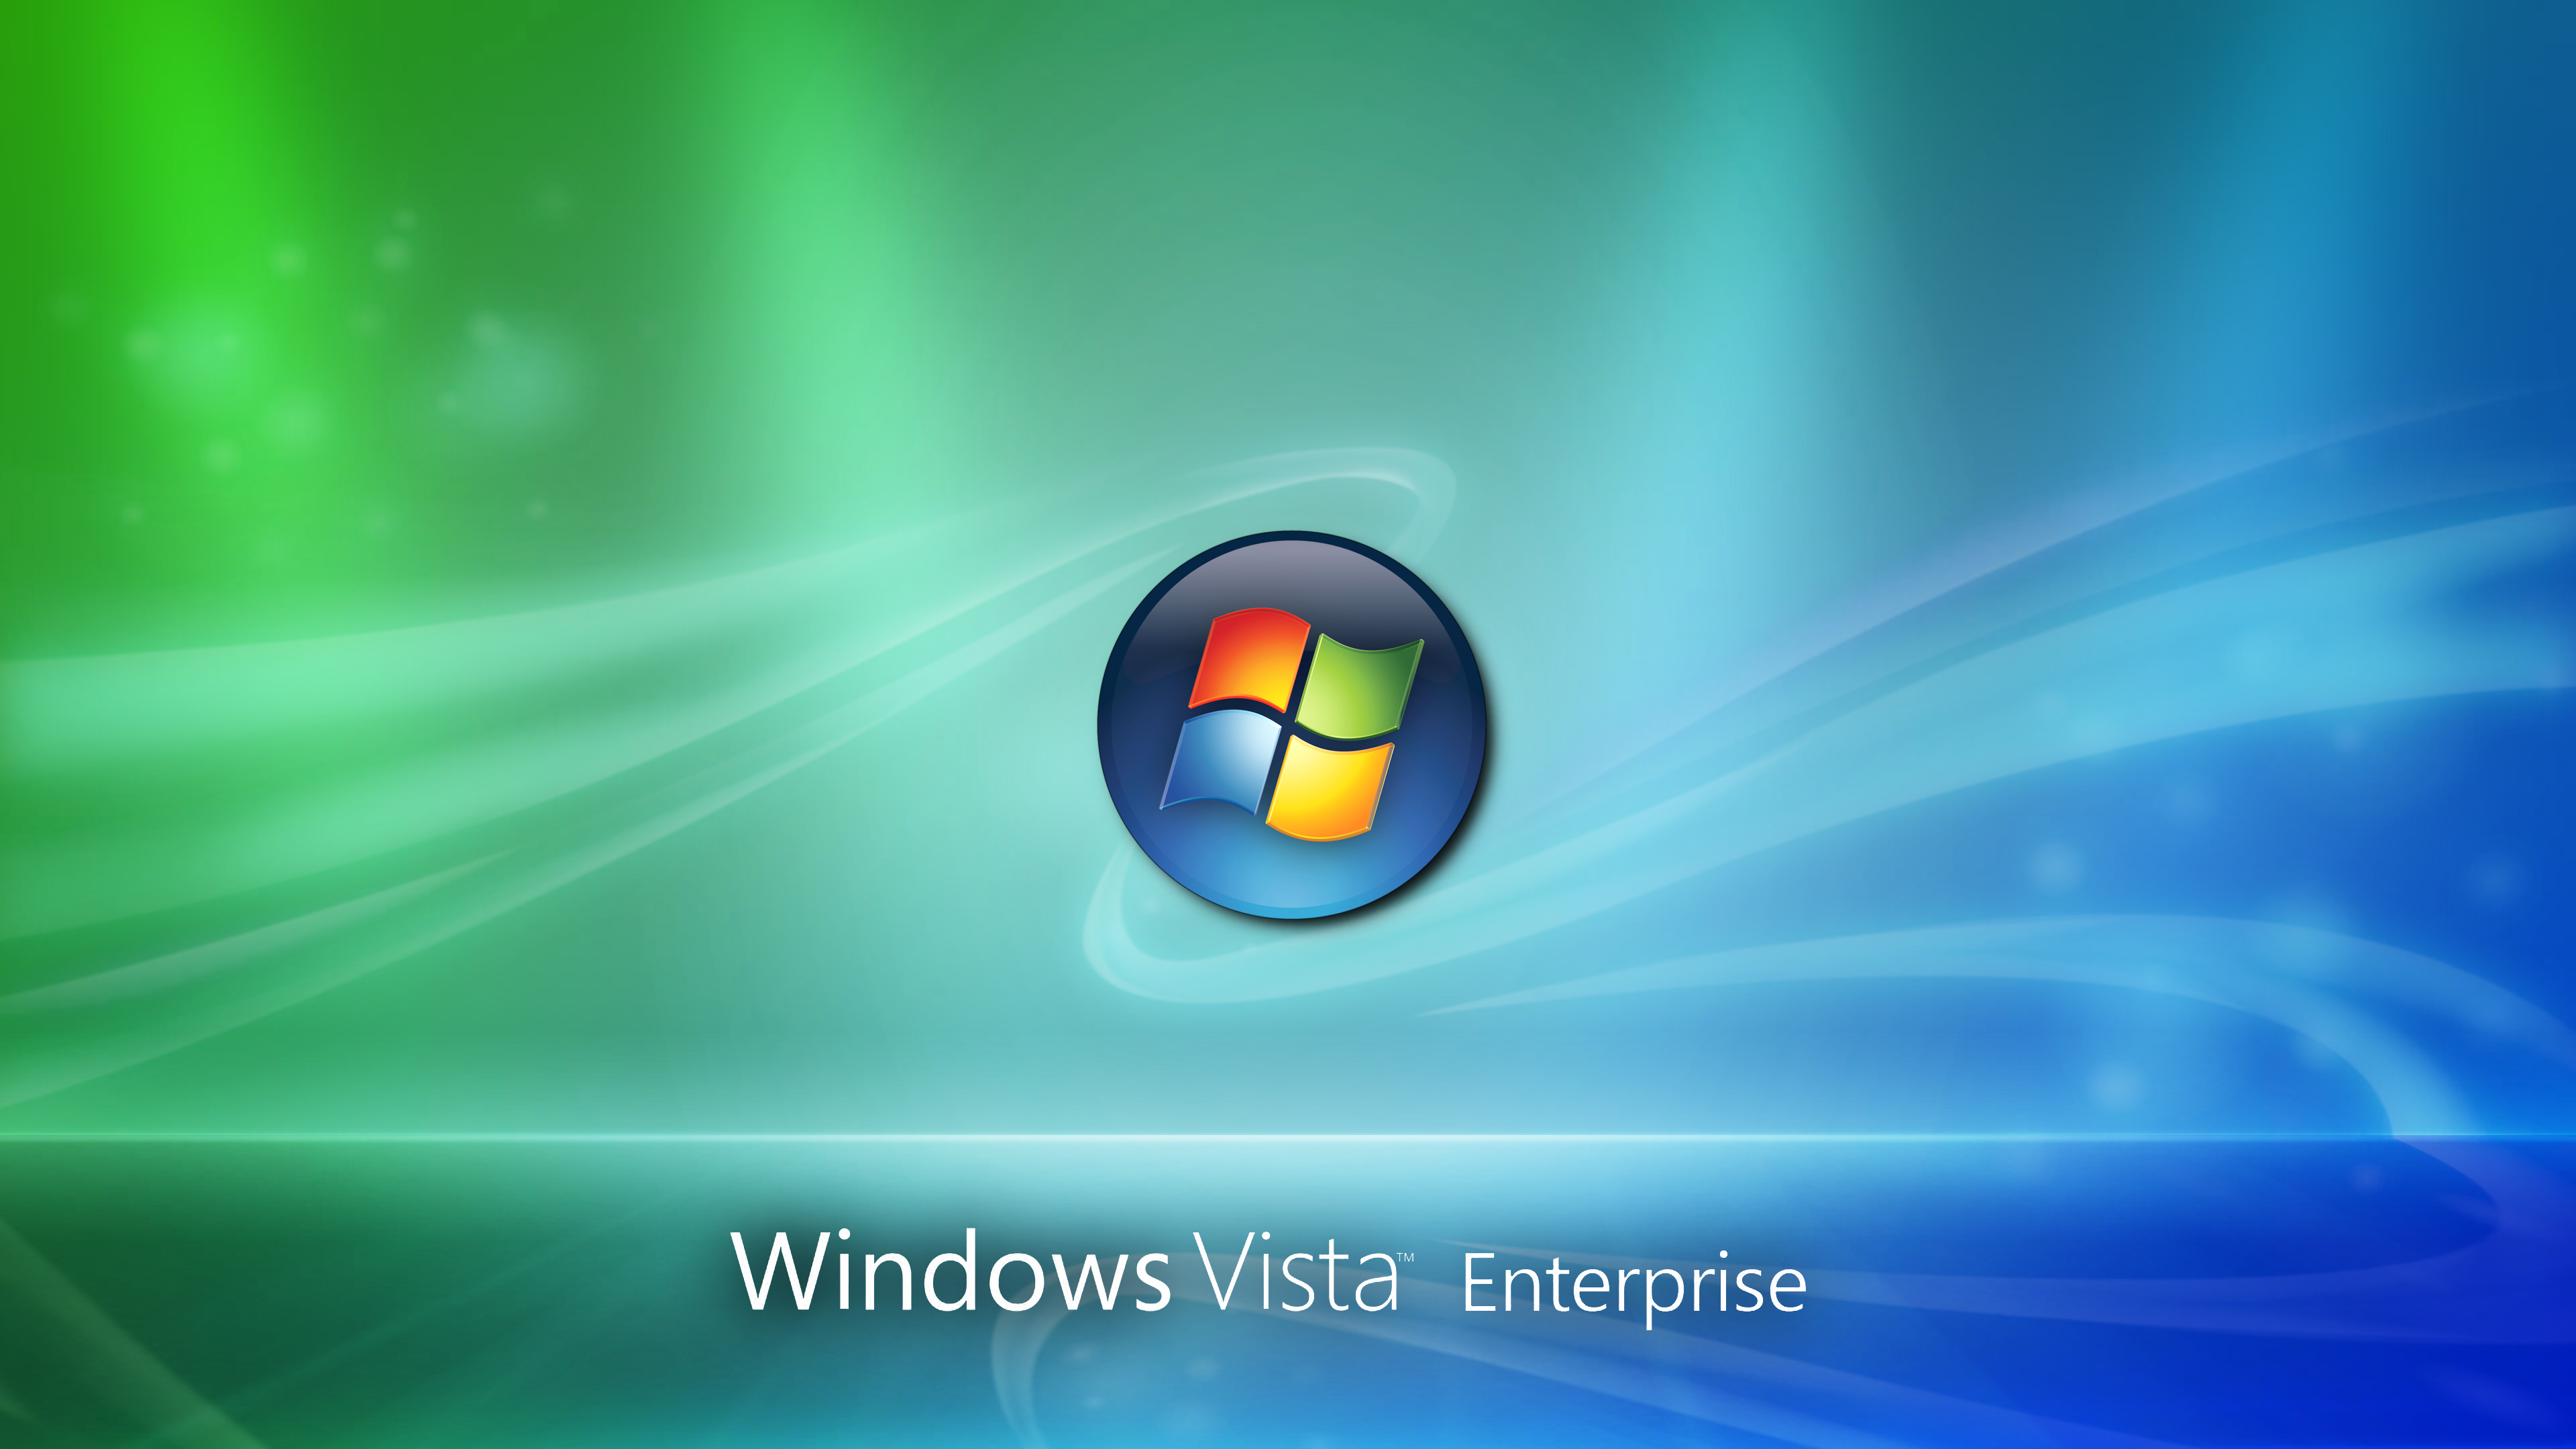 Windows Vista Wallpaper